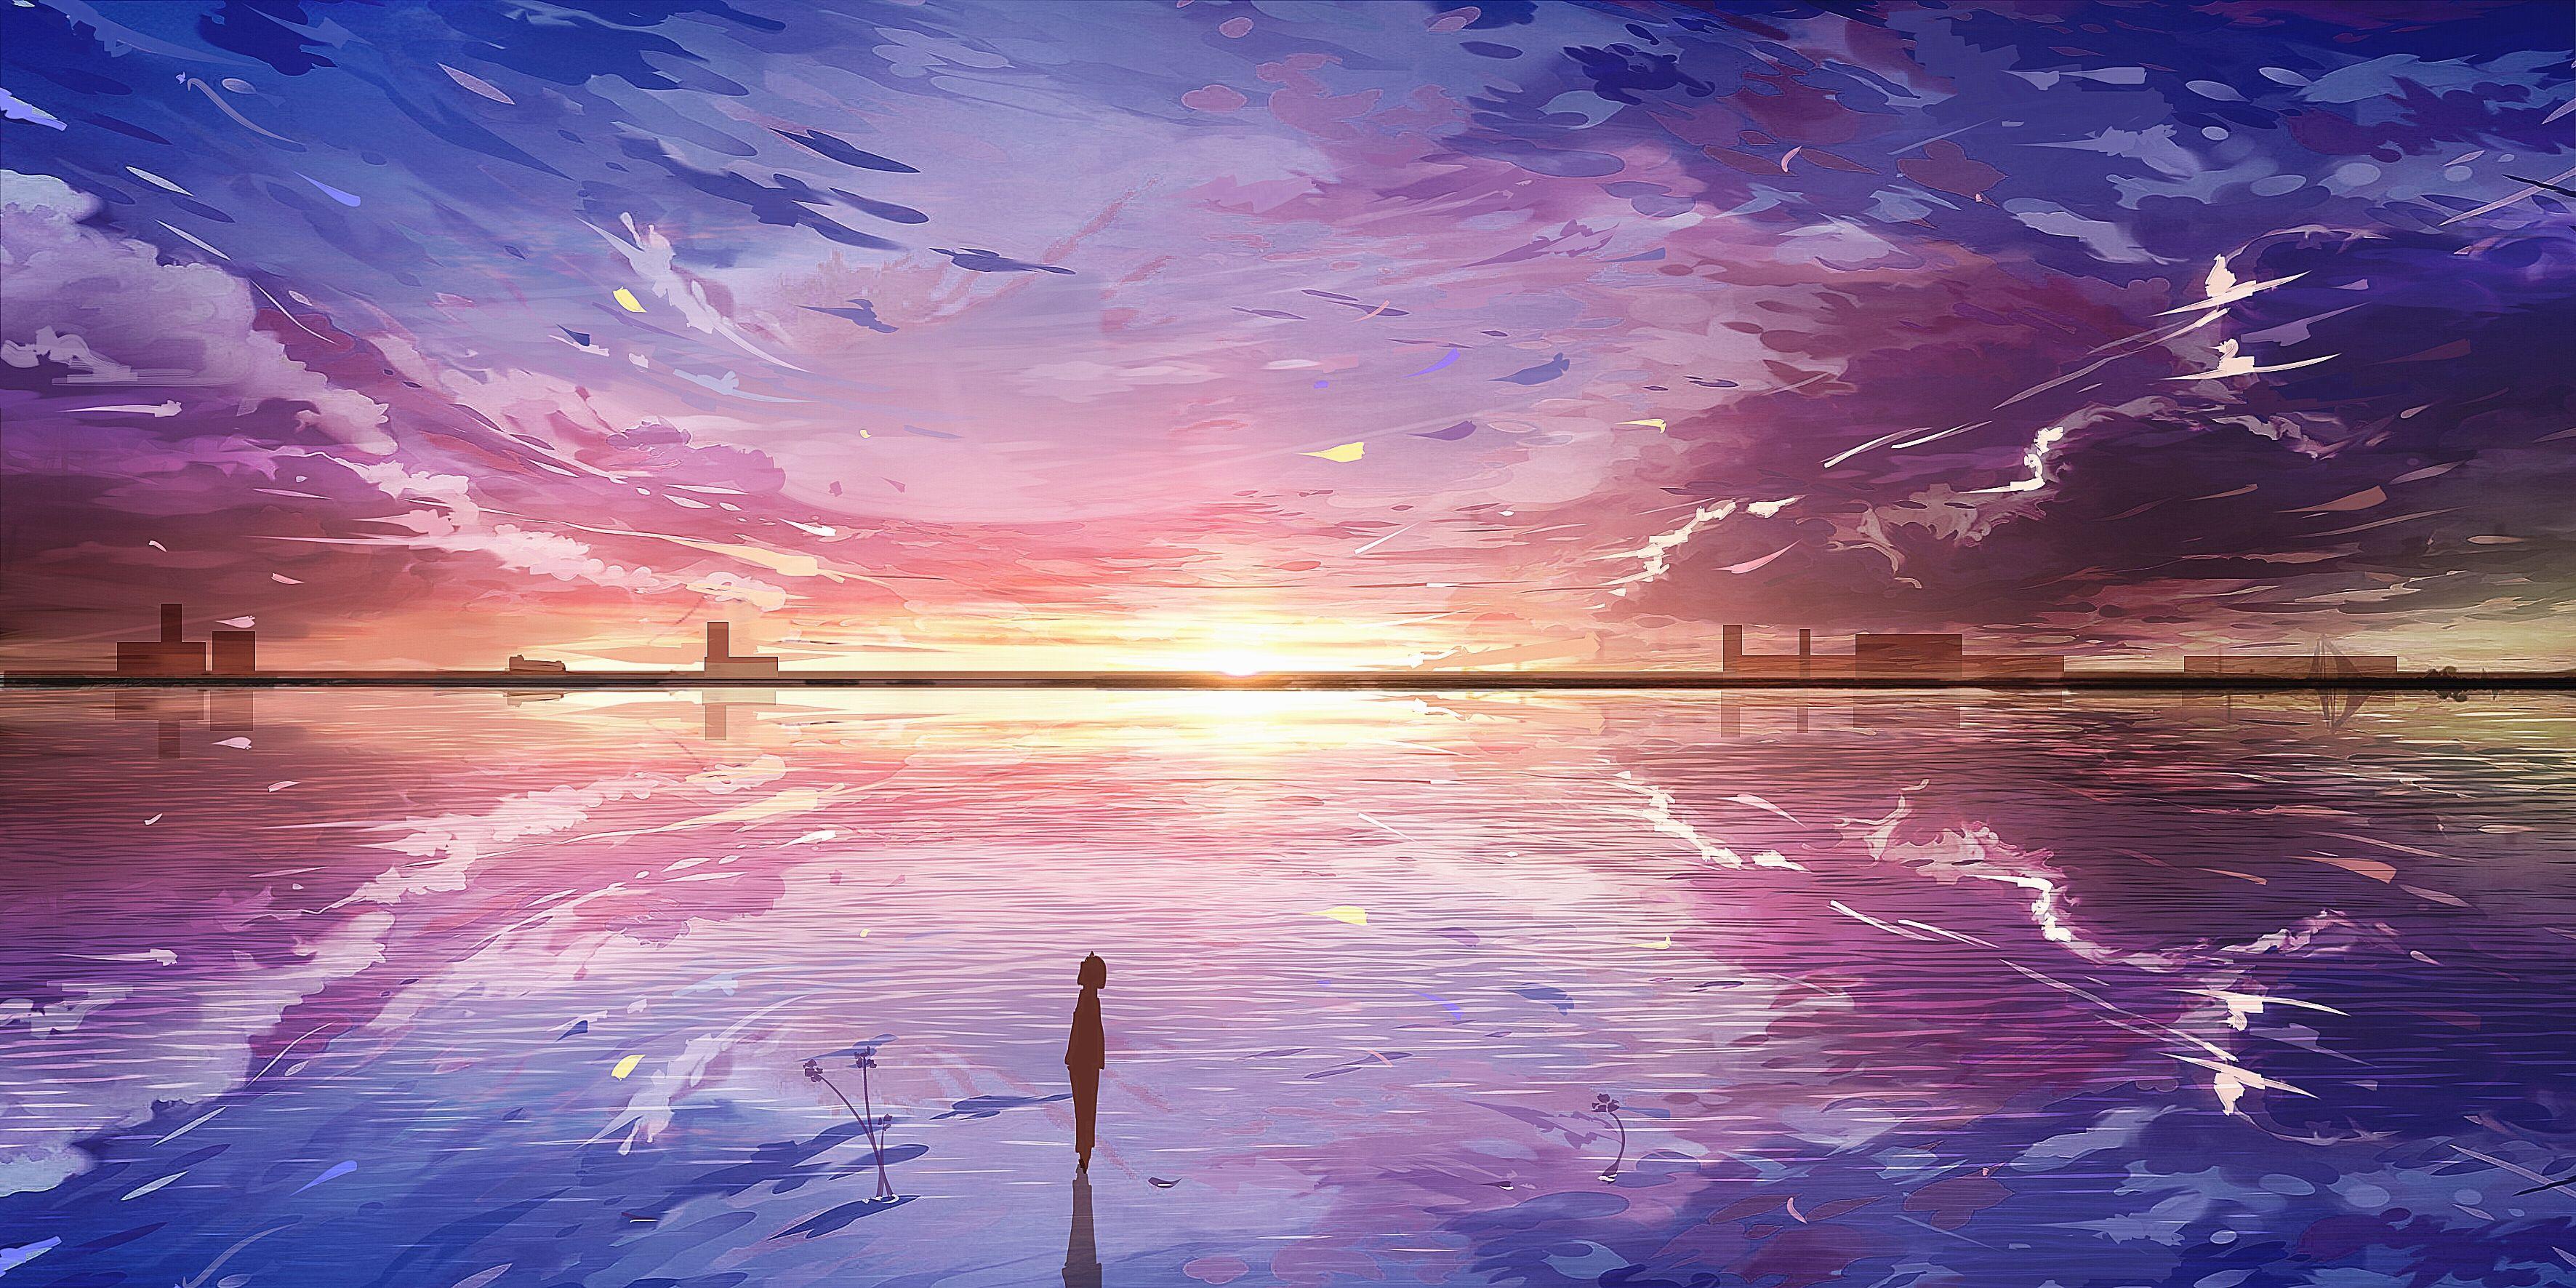 4K Anime Art Wallpapers - Top Free 4K Anime Art Backgrounds ...